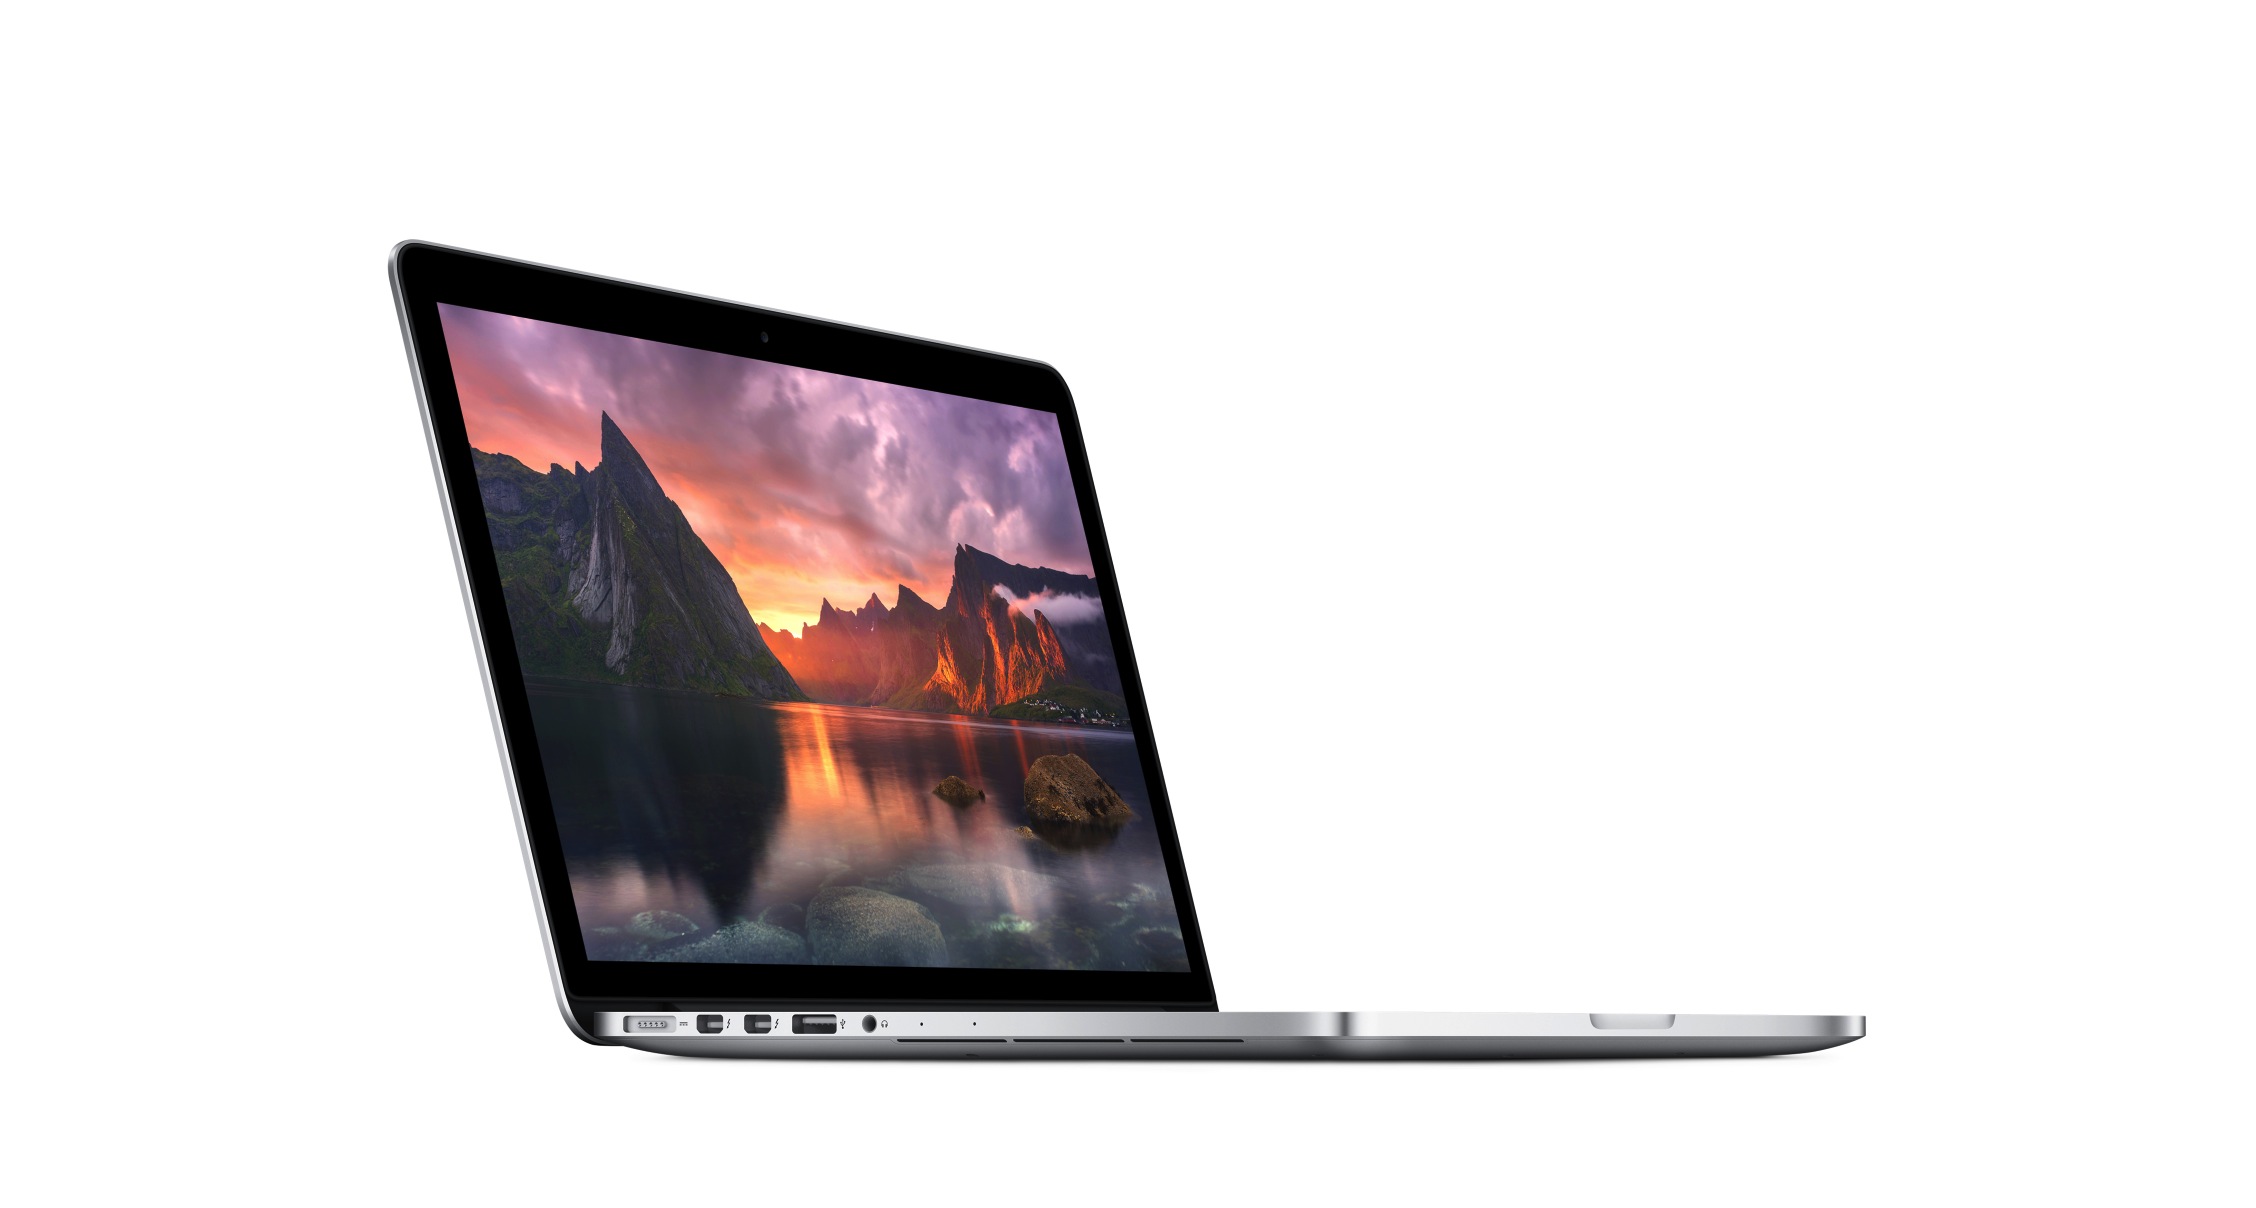 macbook pro 15 inch 2.4ghz with retina display